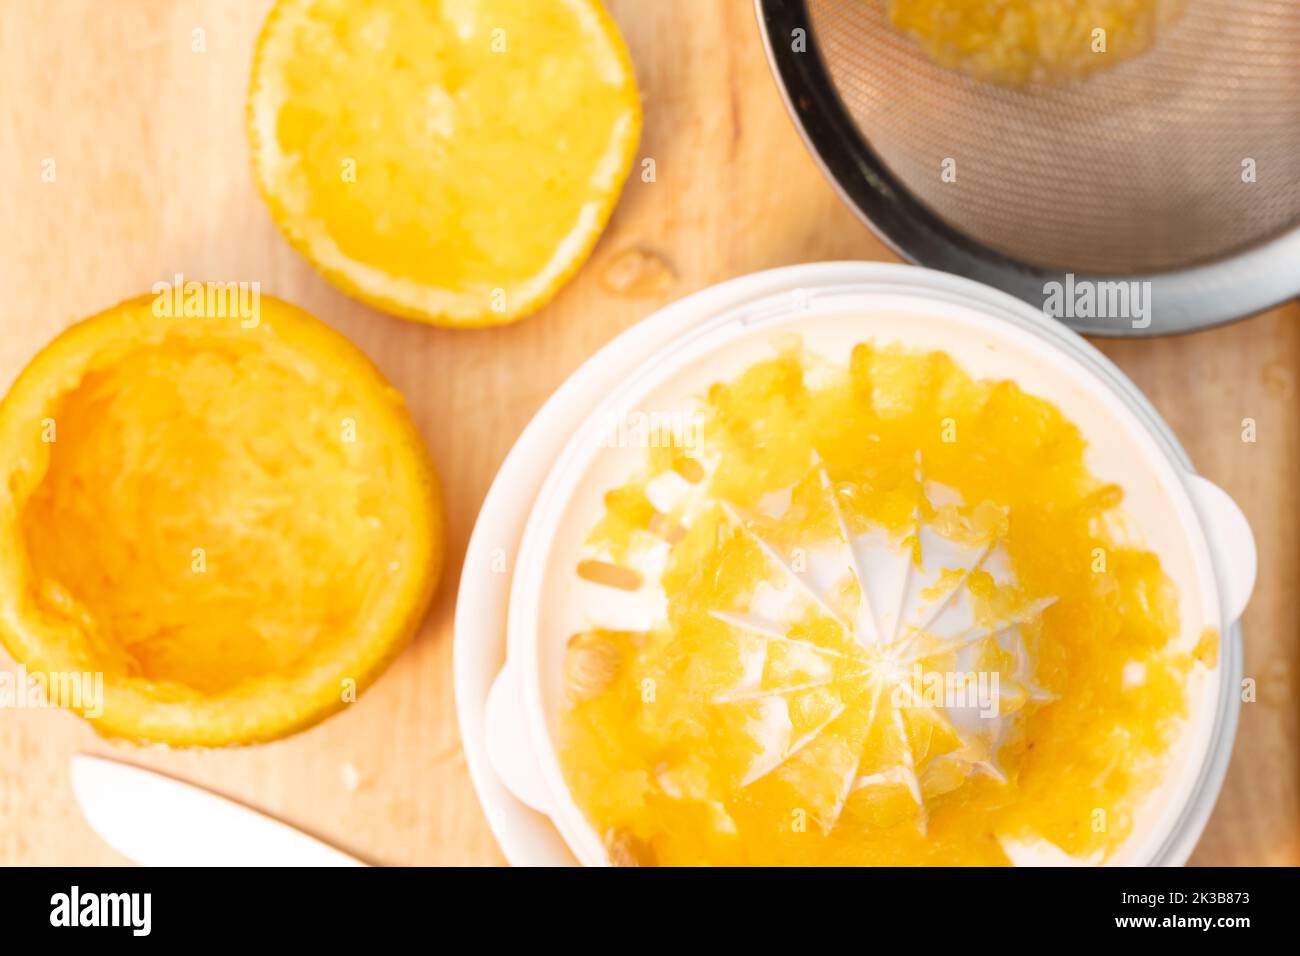 making fresh orange juice at home Stock Photo